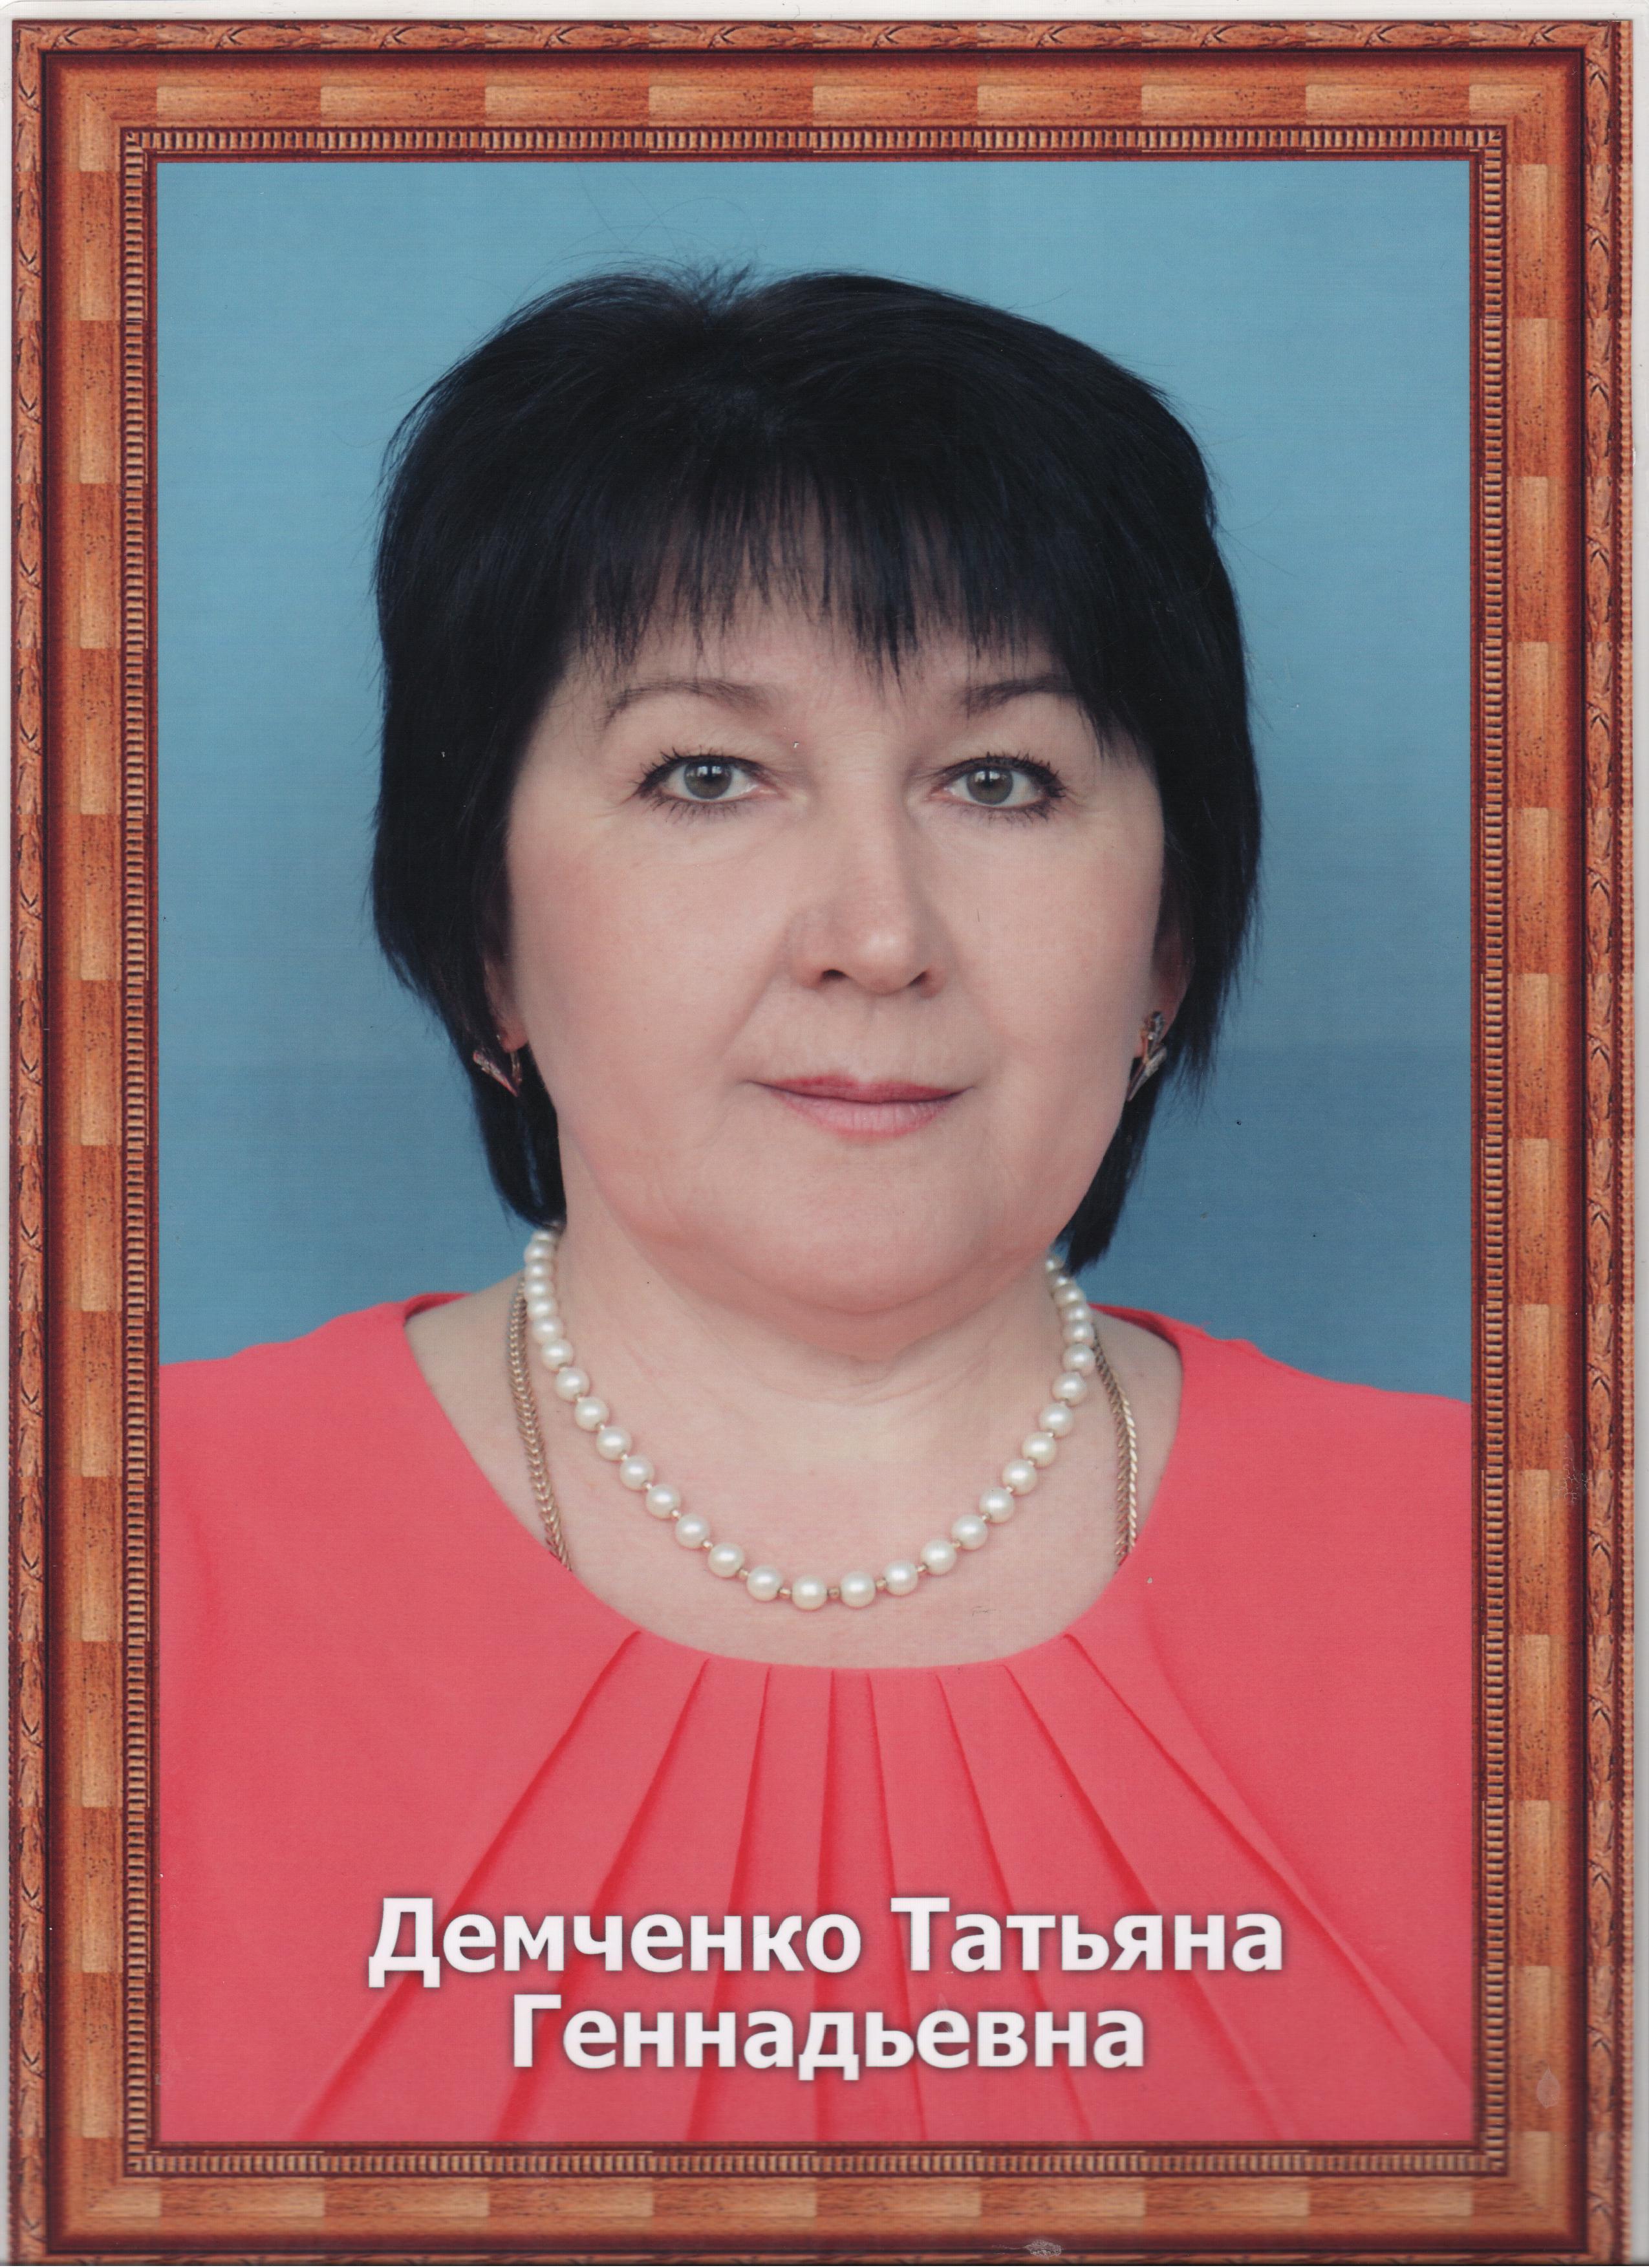 Демченко Татьяна Геннадьевна.